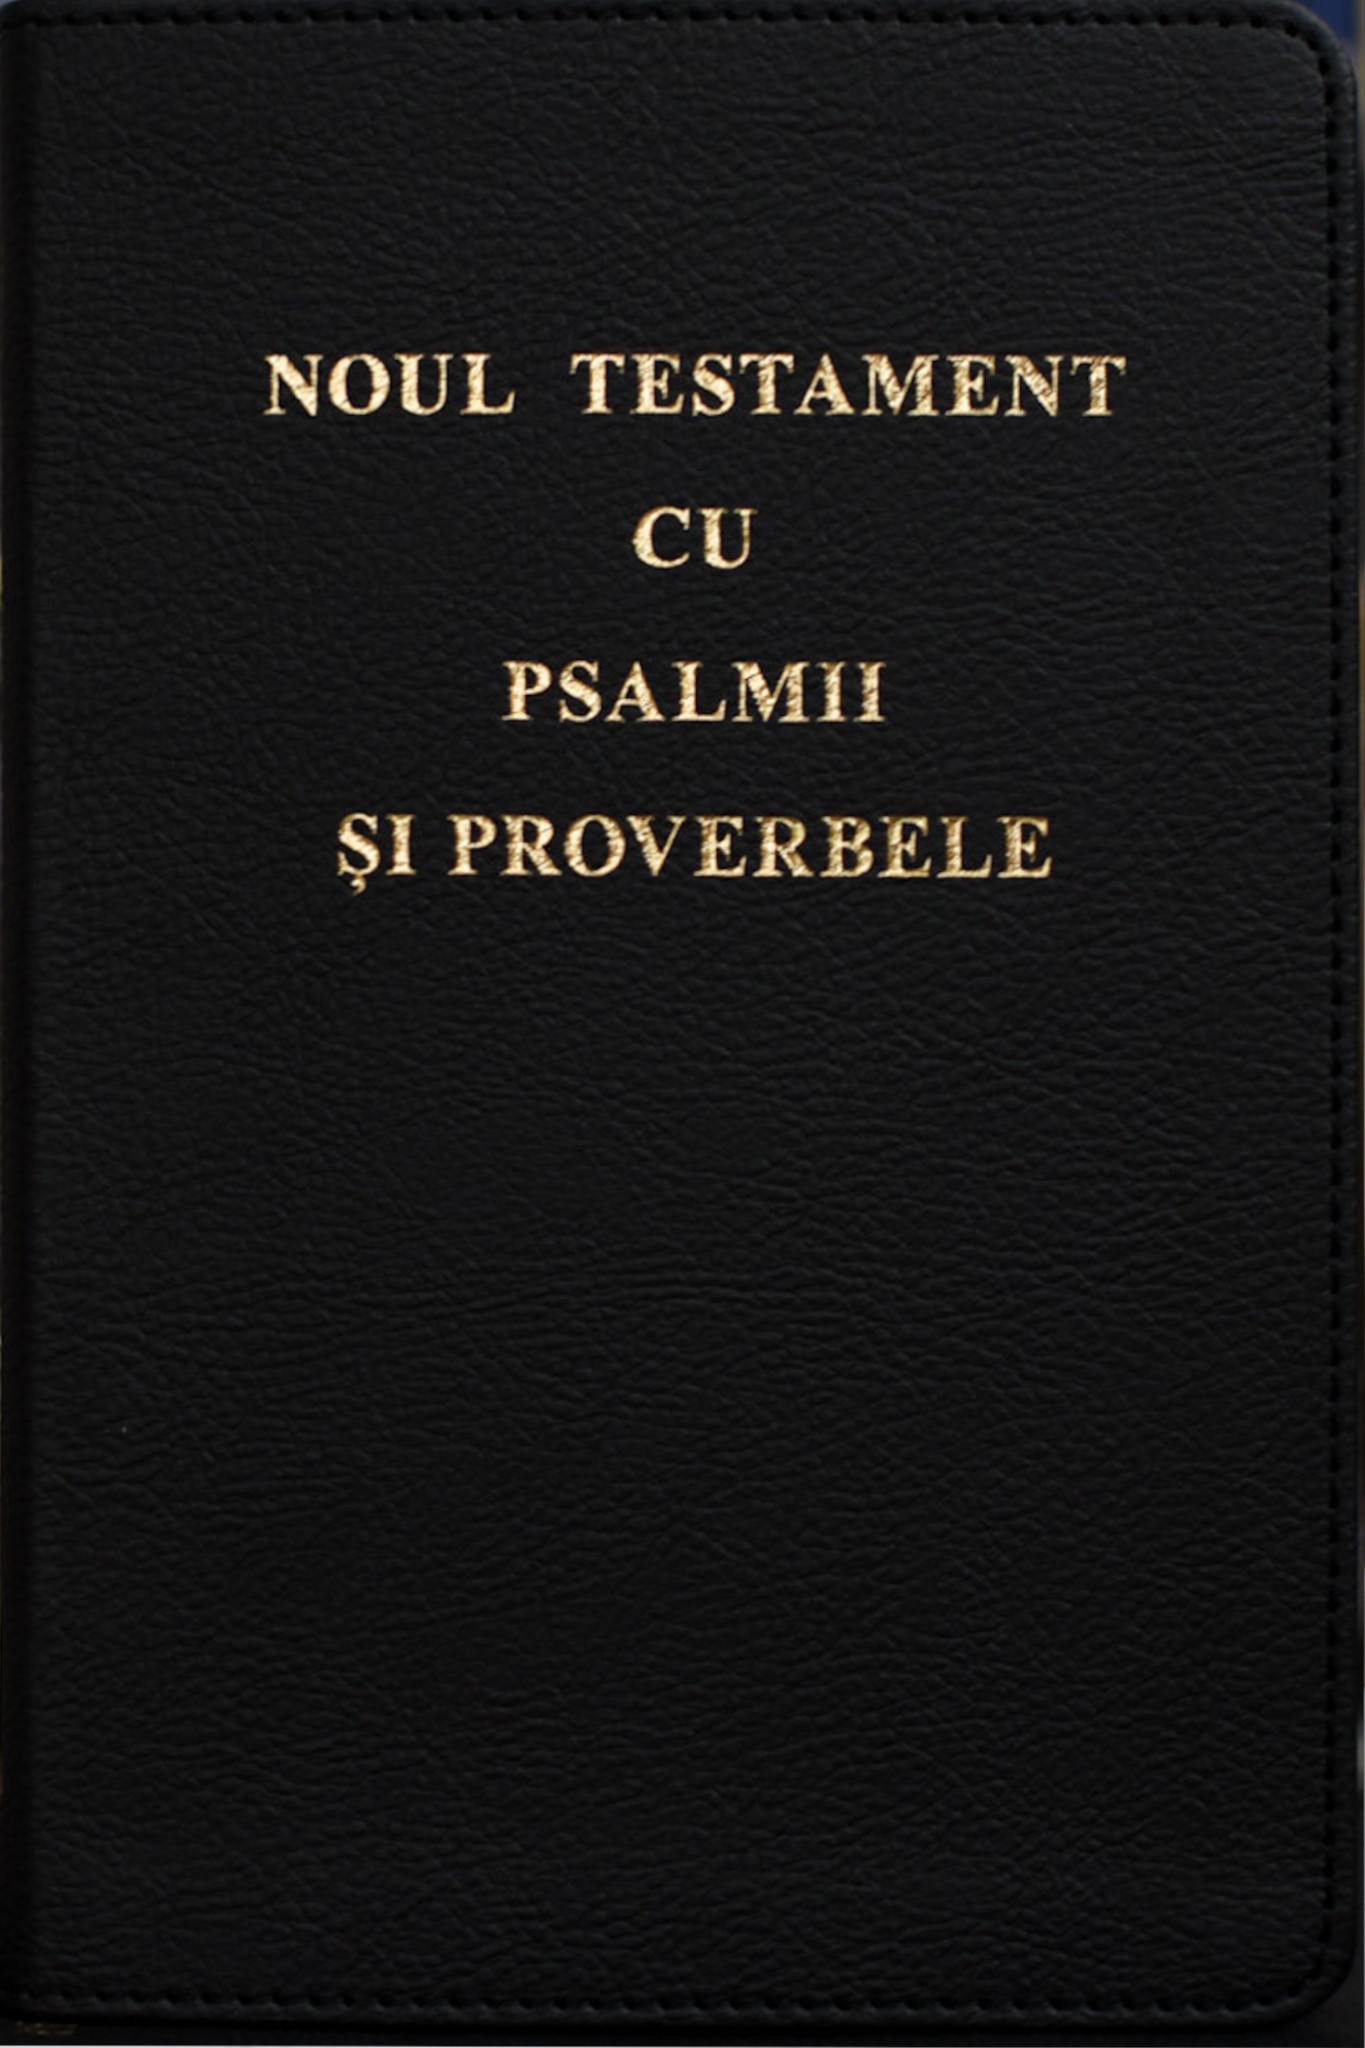 Noul Testament cu Psalmii si Proverbe - coperta moale